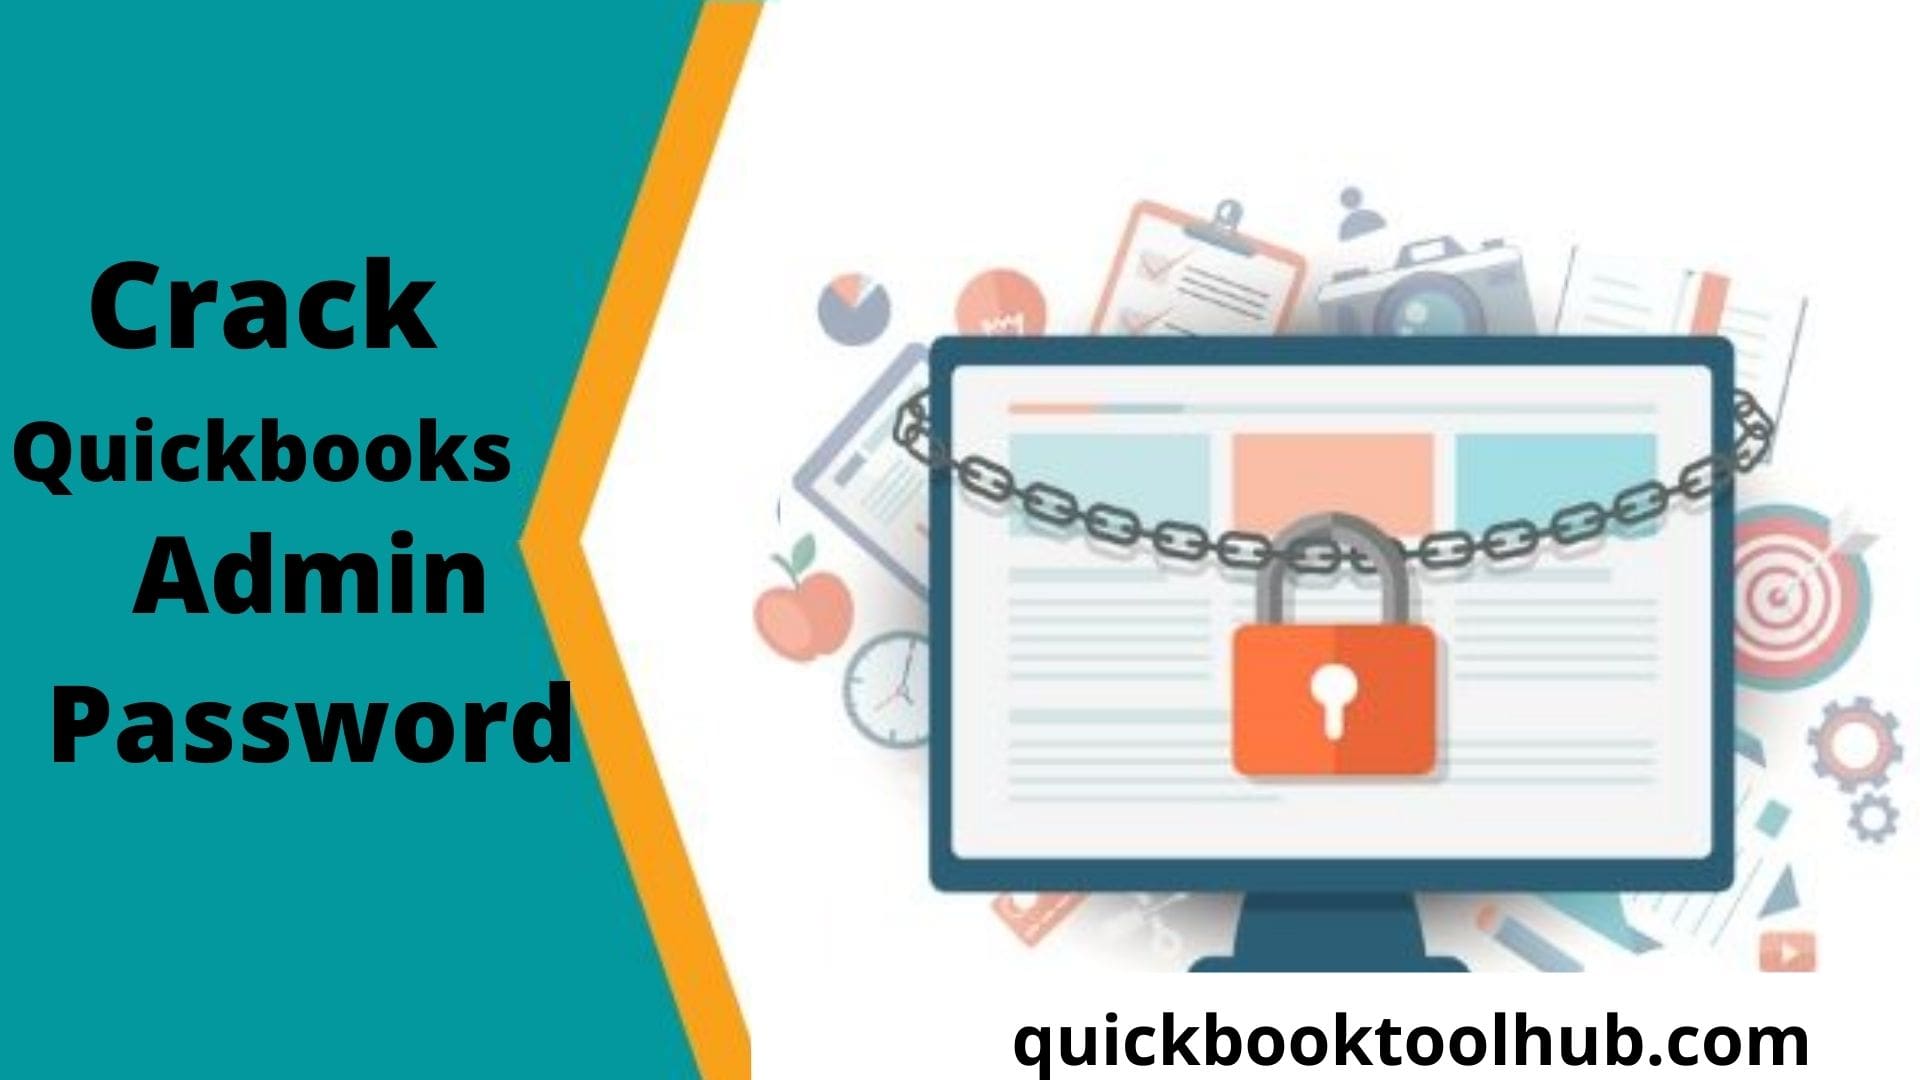 us quickbooks password reset tool